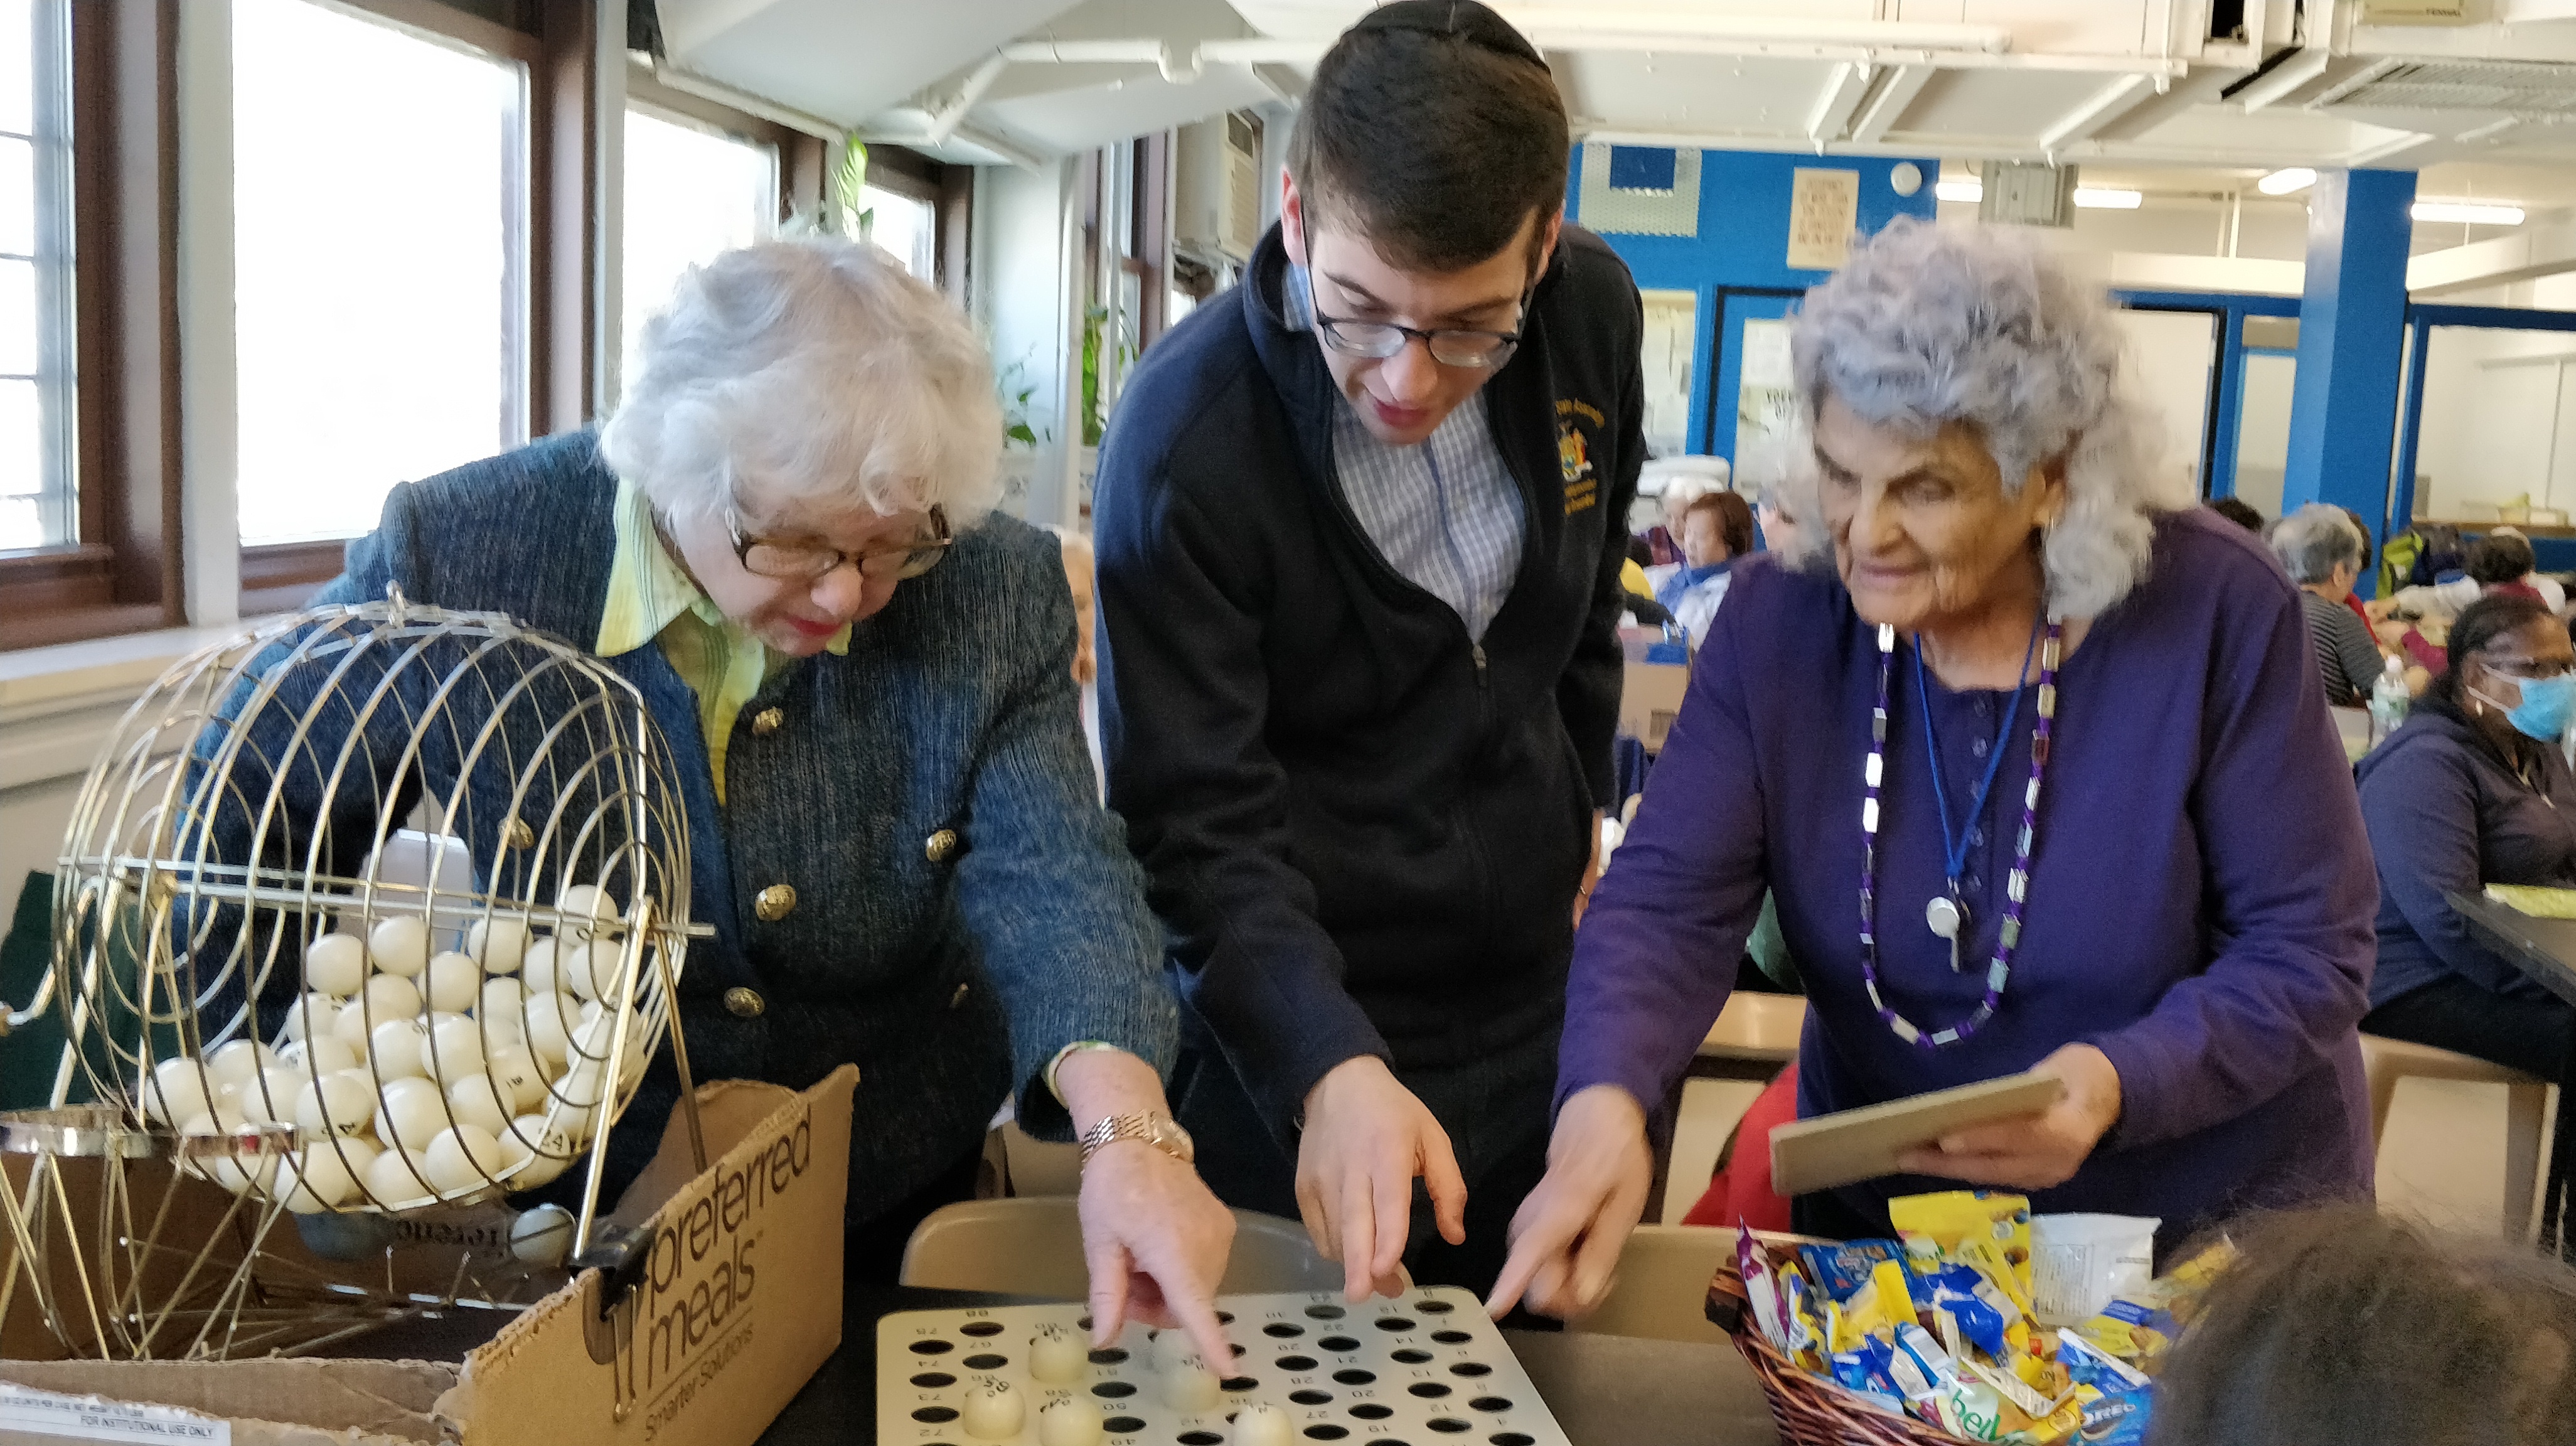 How to play bingo with seniors